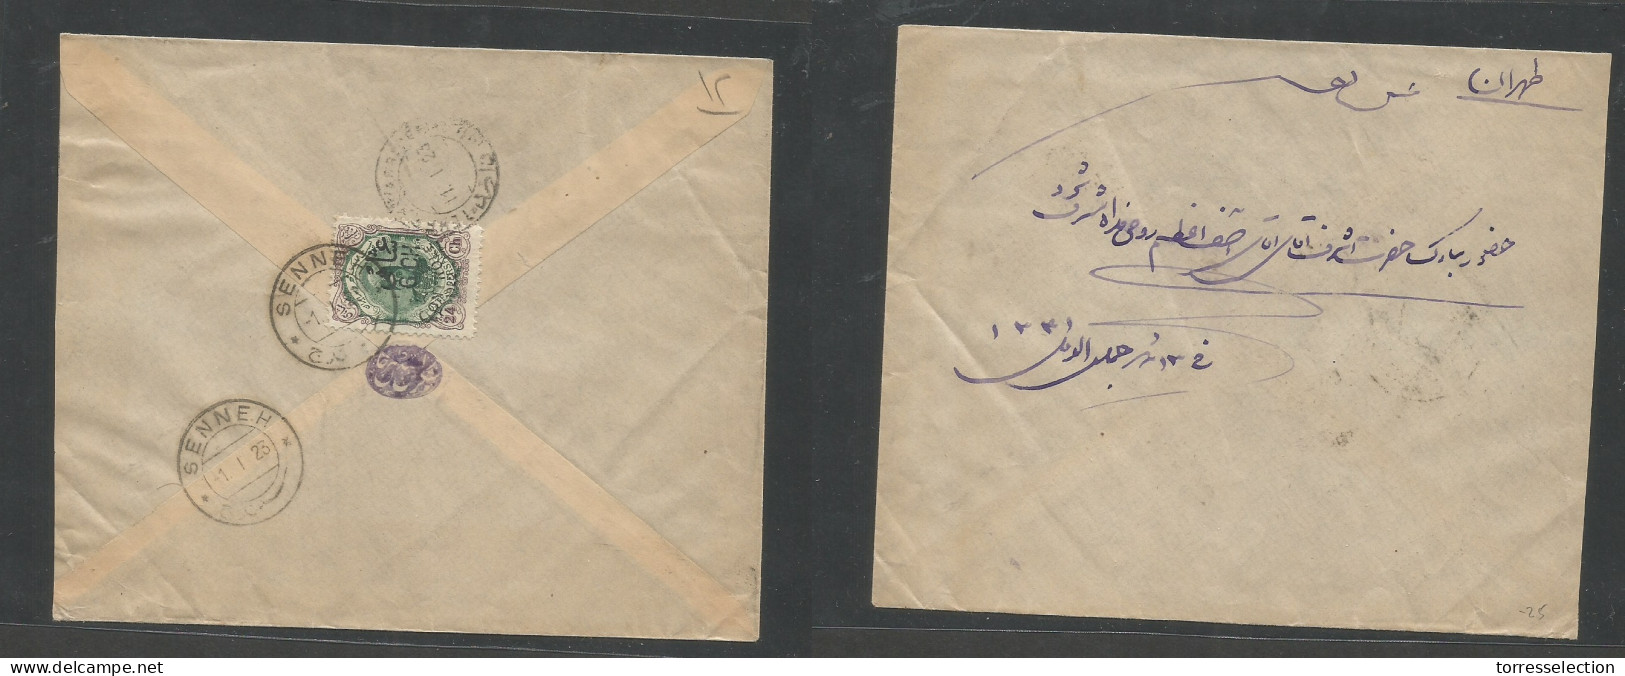 PERSIA. 1923 (1 Jan) Senneh - Teheran (11 Jan) "Controle" Issue. 6ch /24ch Ovptd Value, Reverse Single Fkd Local Envelop - Irán